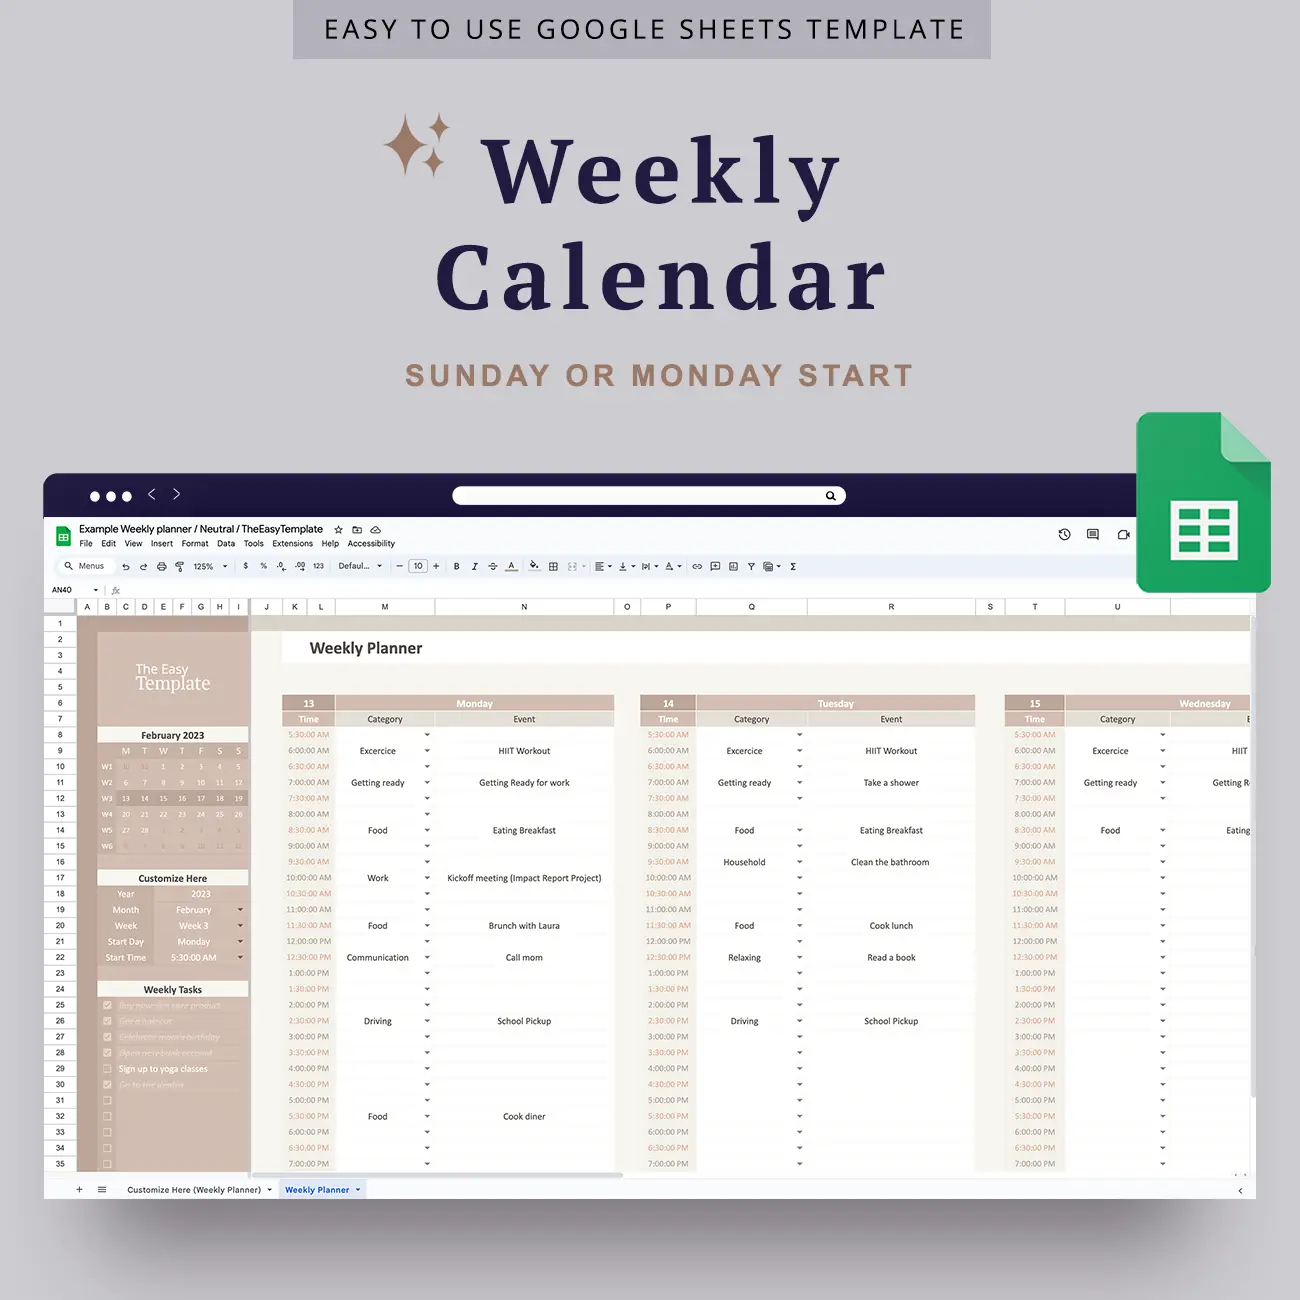 Weekly Calendar Template for Google Sheets TheEasyTemplate